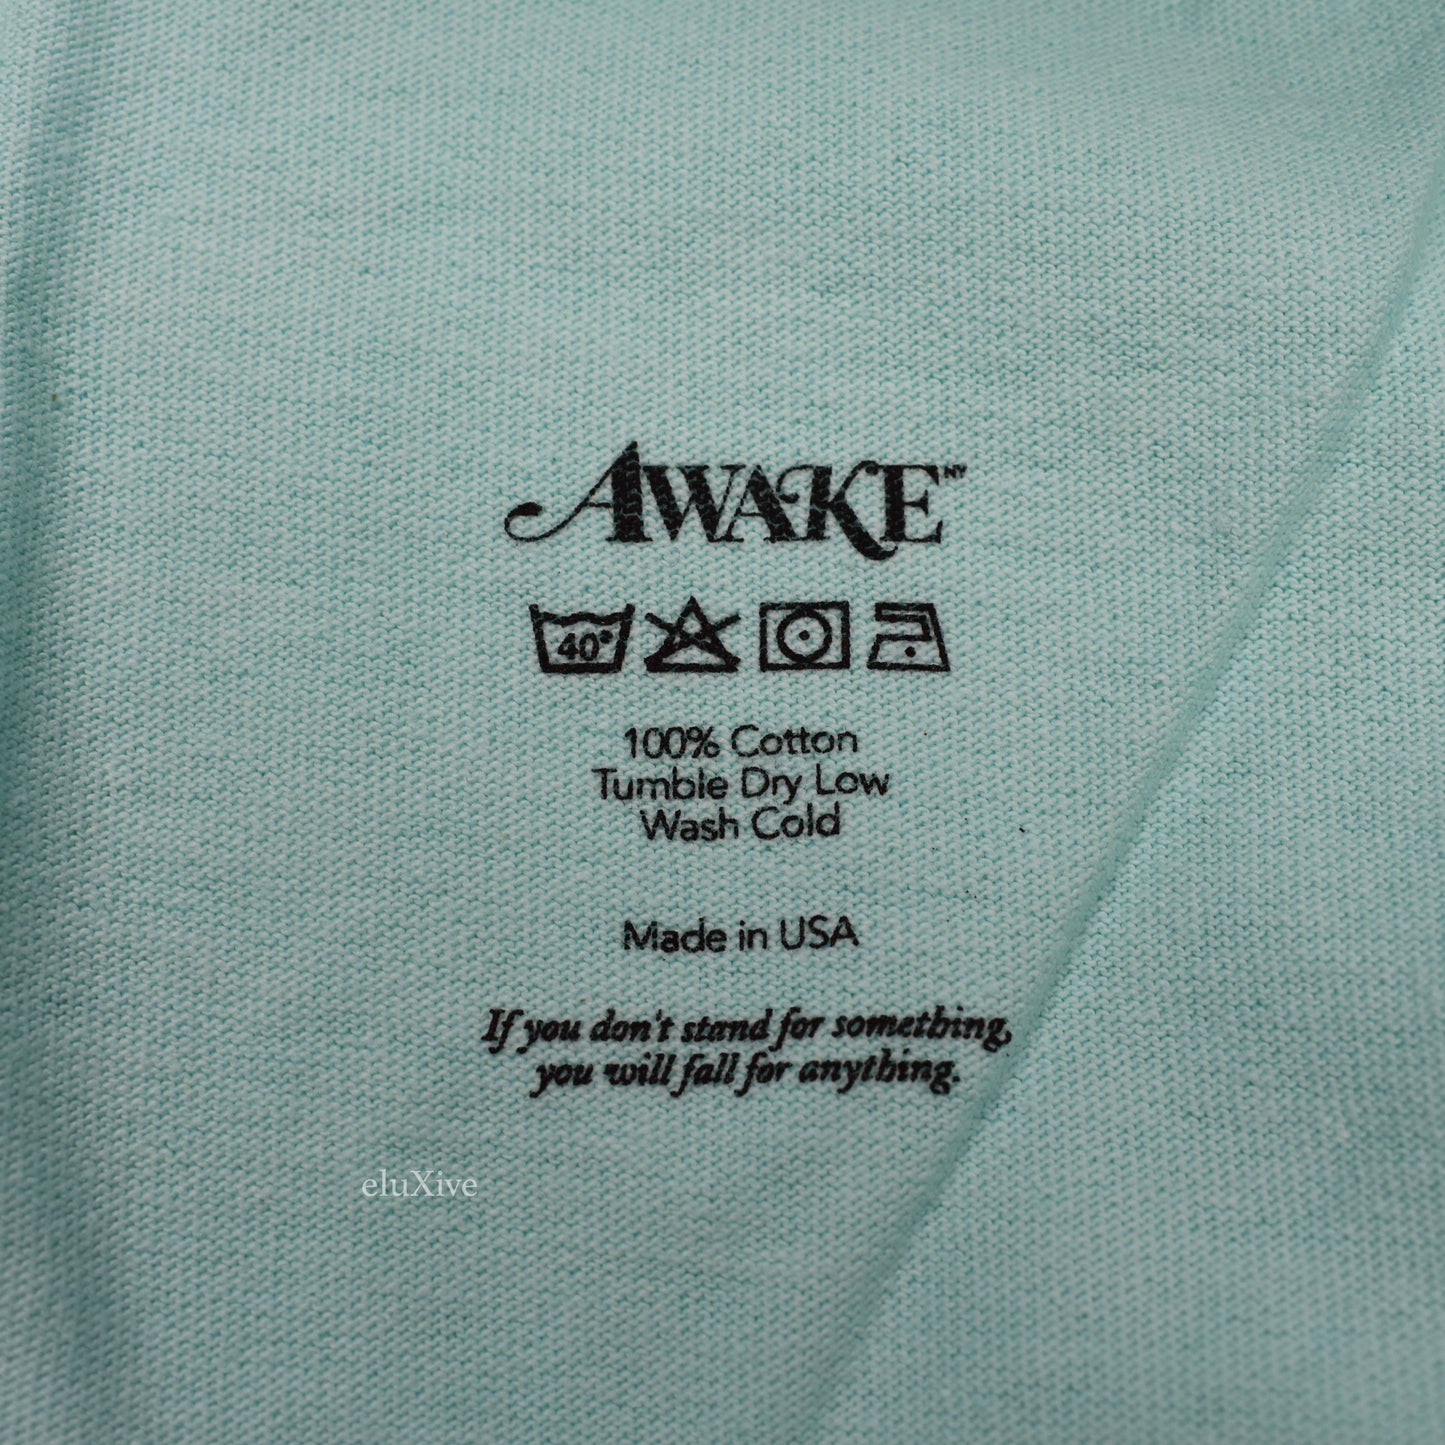 Awake NY - Aqua Metallic Logo T-Shirt